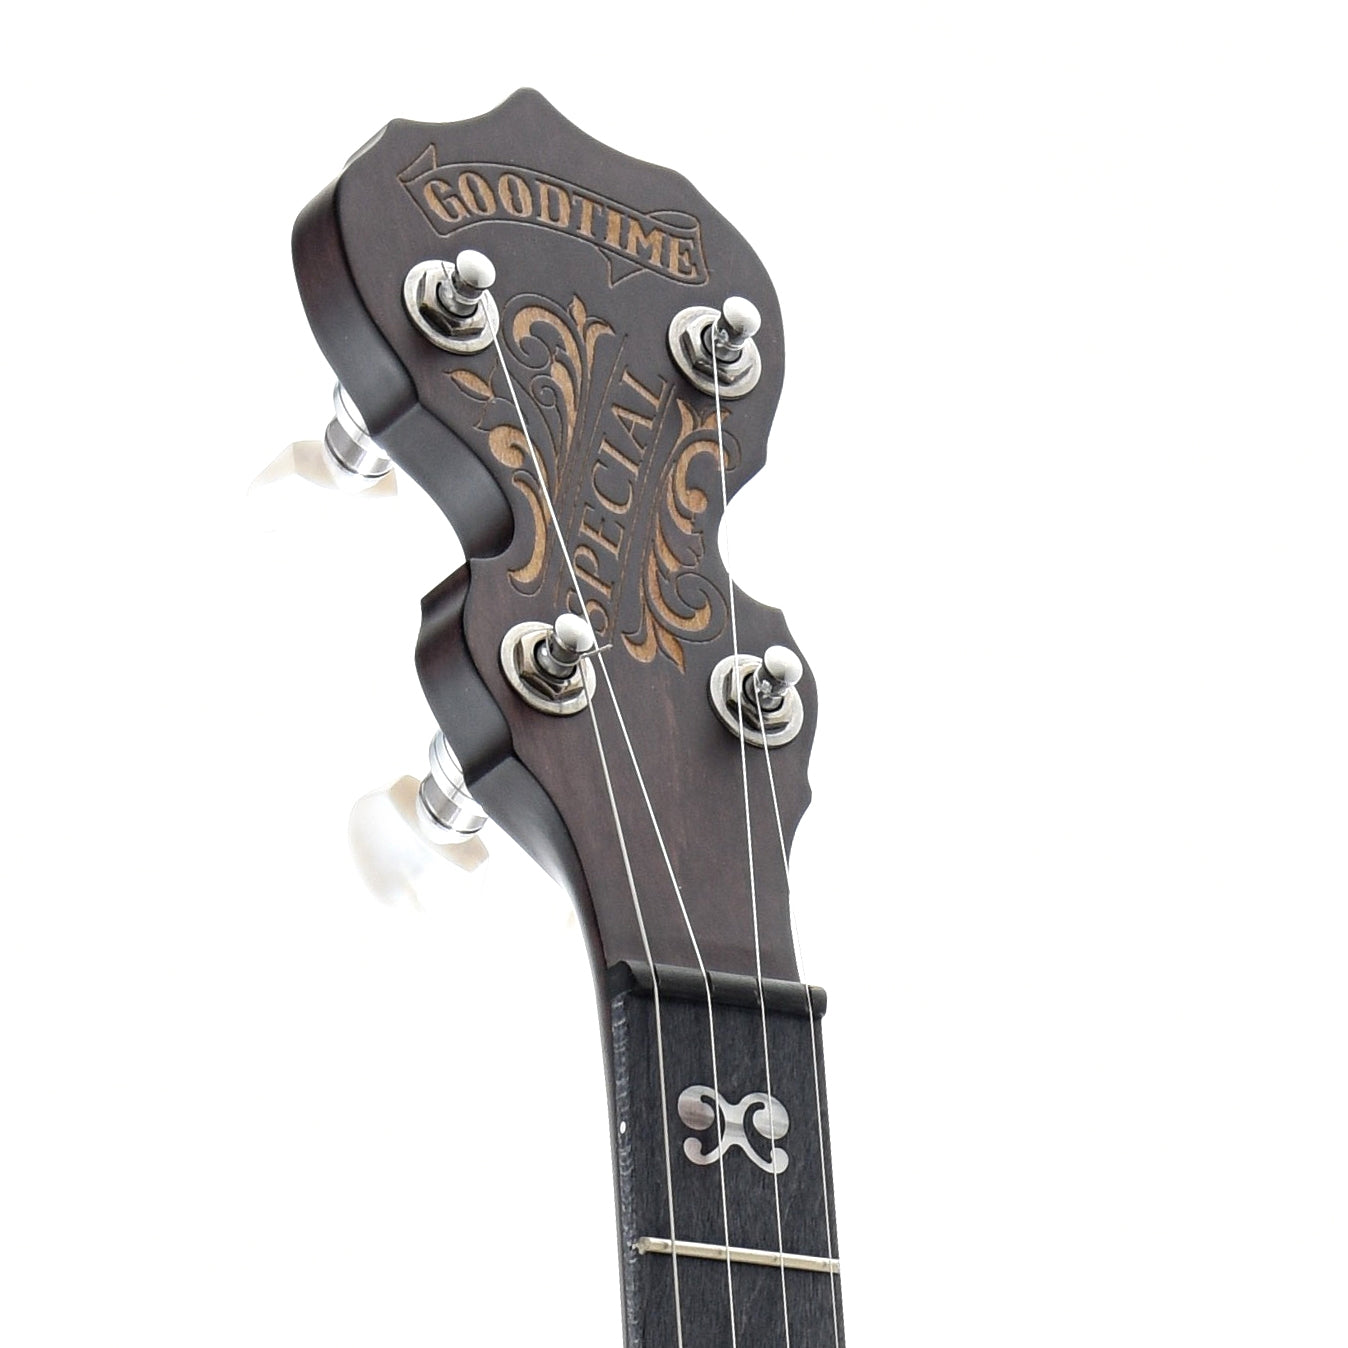 Front Headstock of Deering Artisan Goodtime Special Resonator Banjo